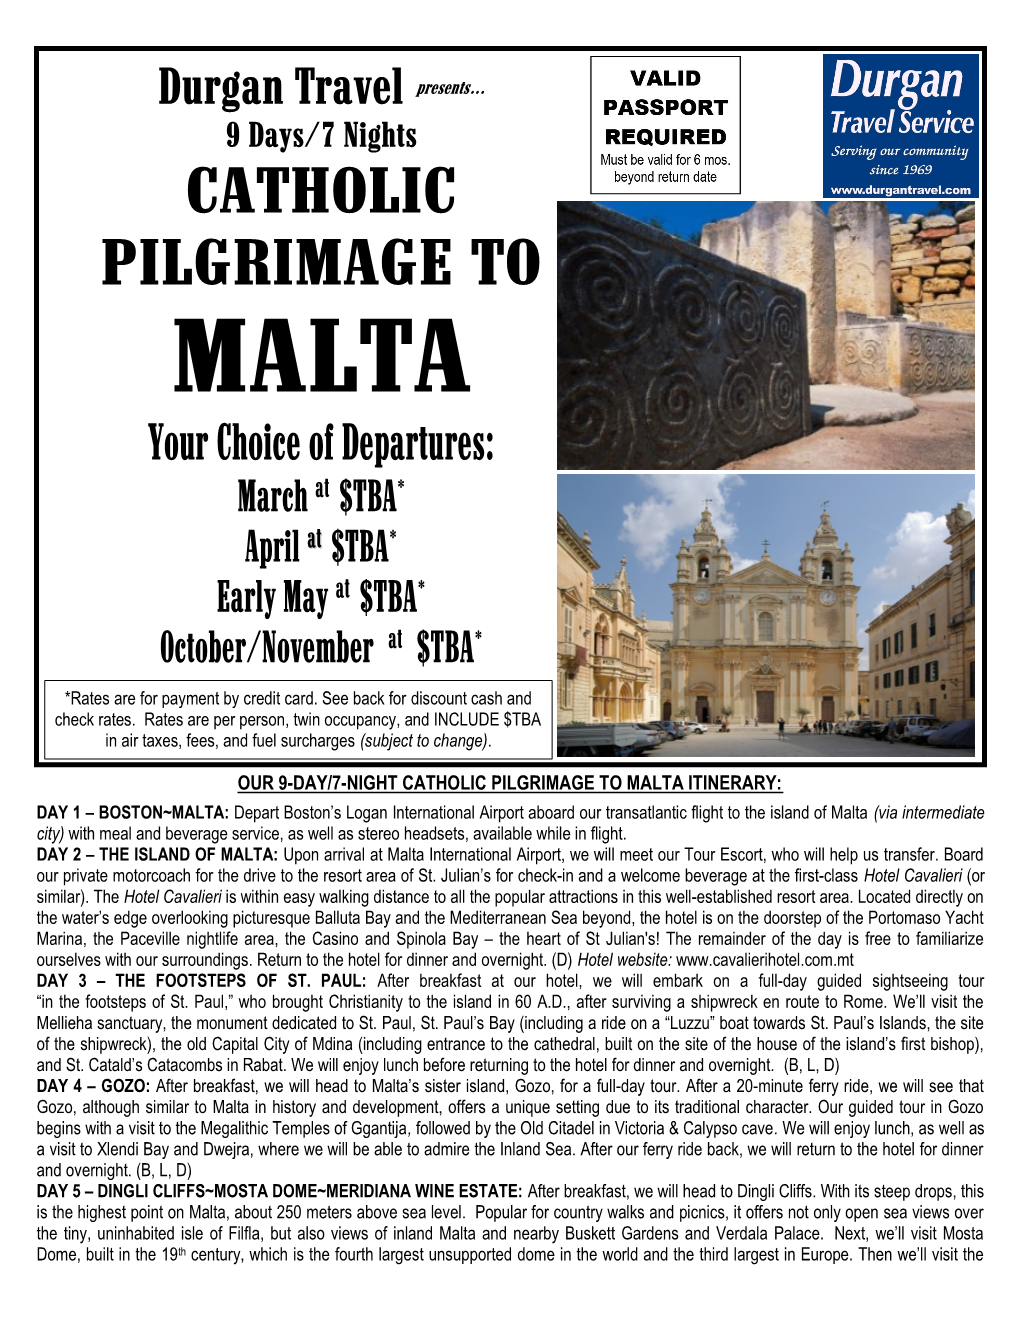 Our 9-Day/7-Night Catholic Pilgrimage to Malta Itinerary